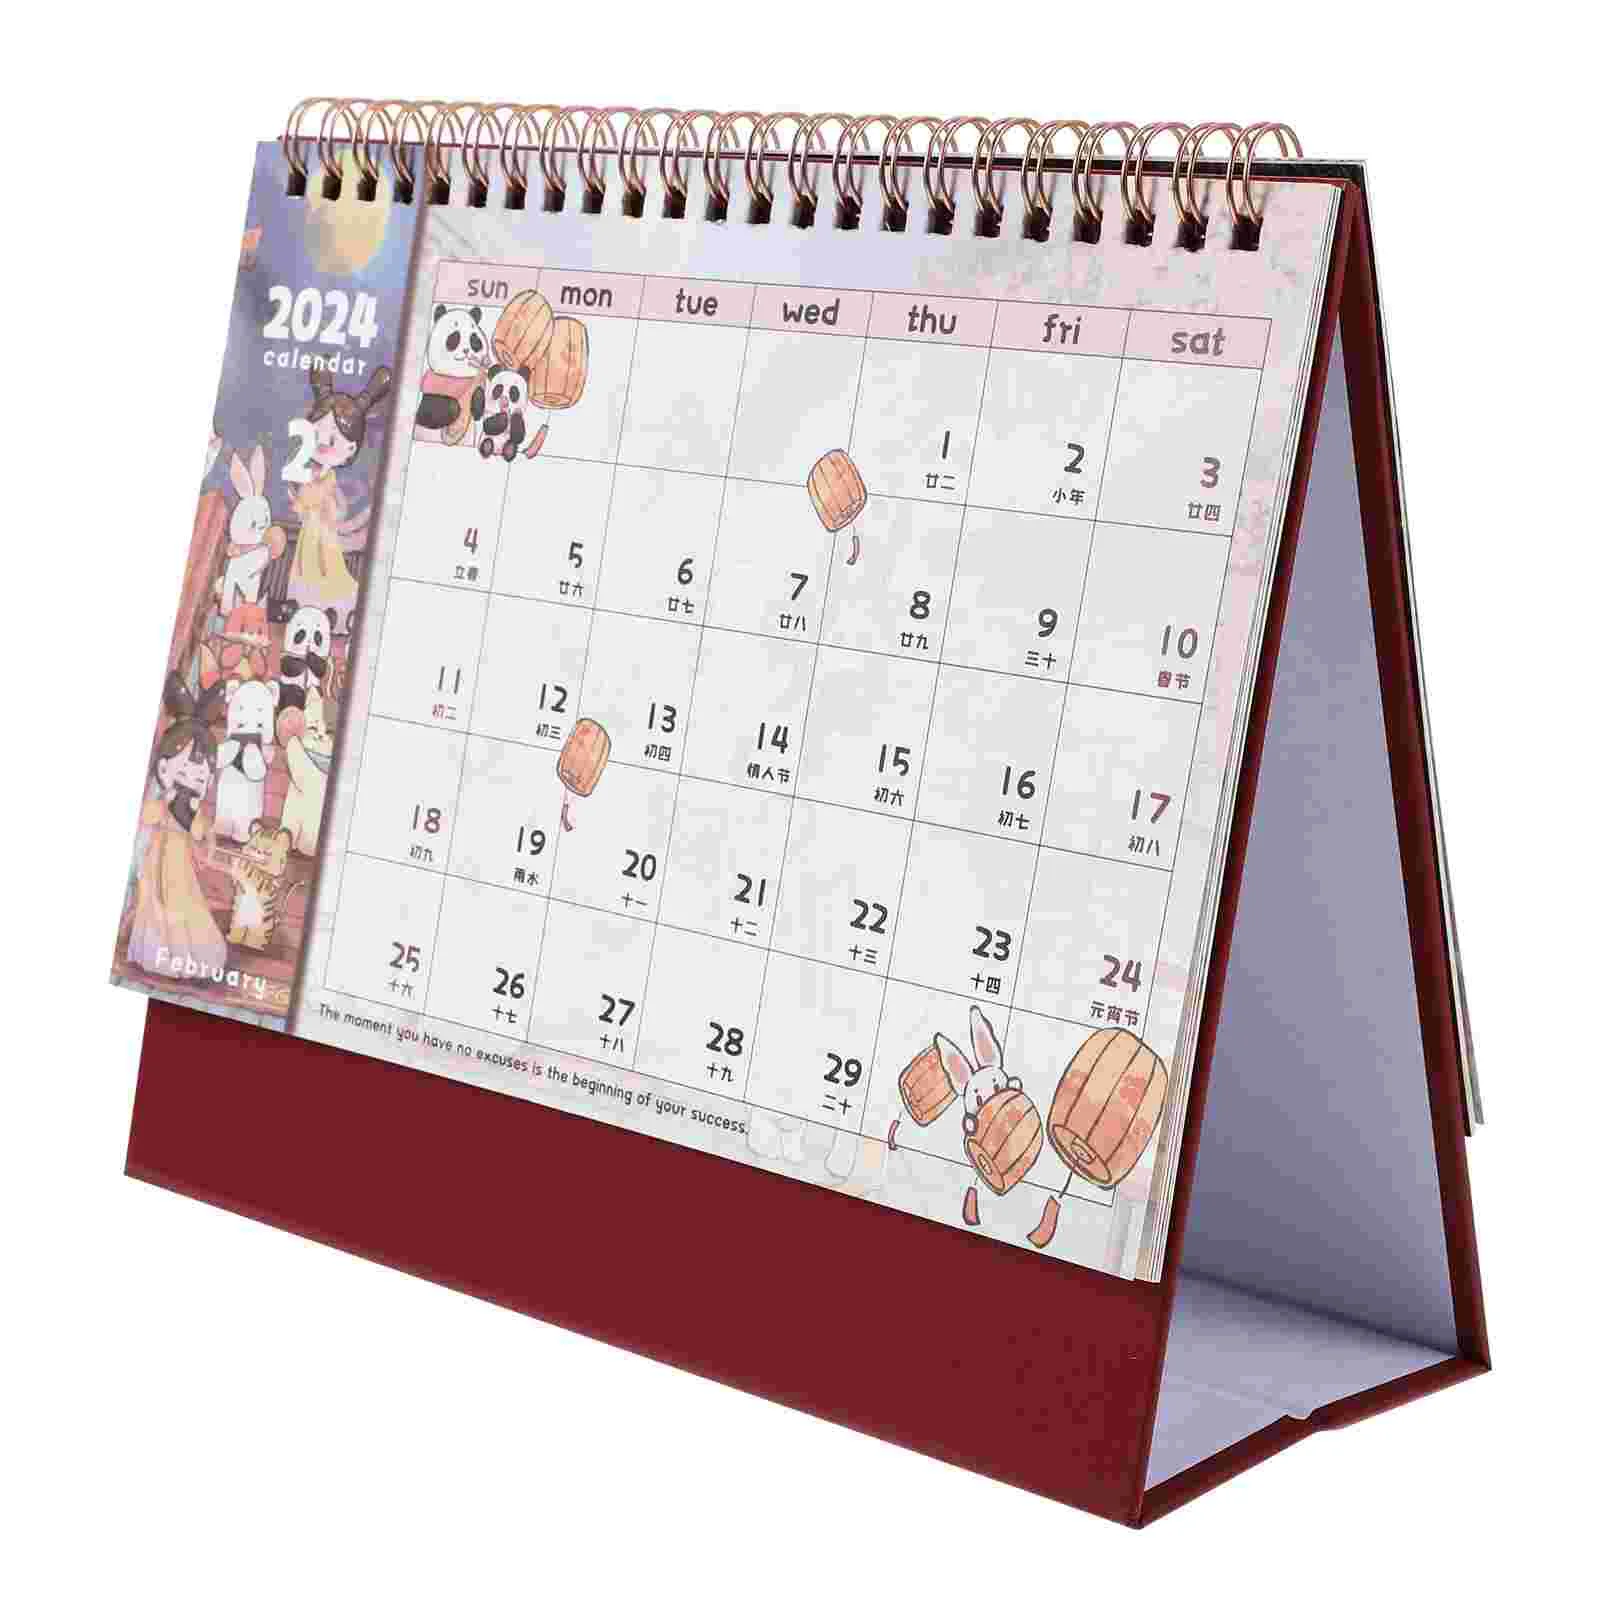 

Office Decor Desk Decor Desktop Calendar Decorative Calendar Calendar Daily Schedule For Home Office School